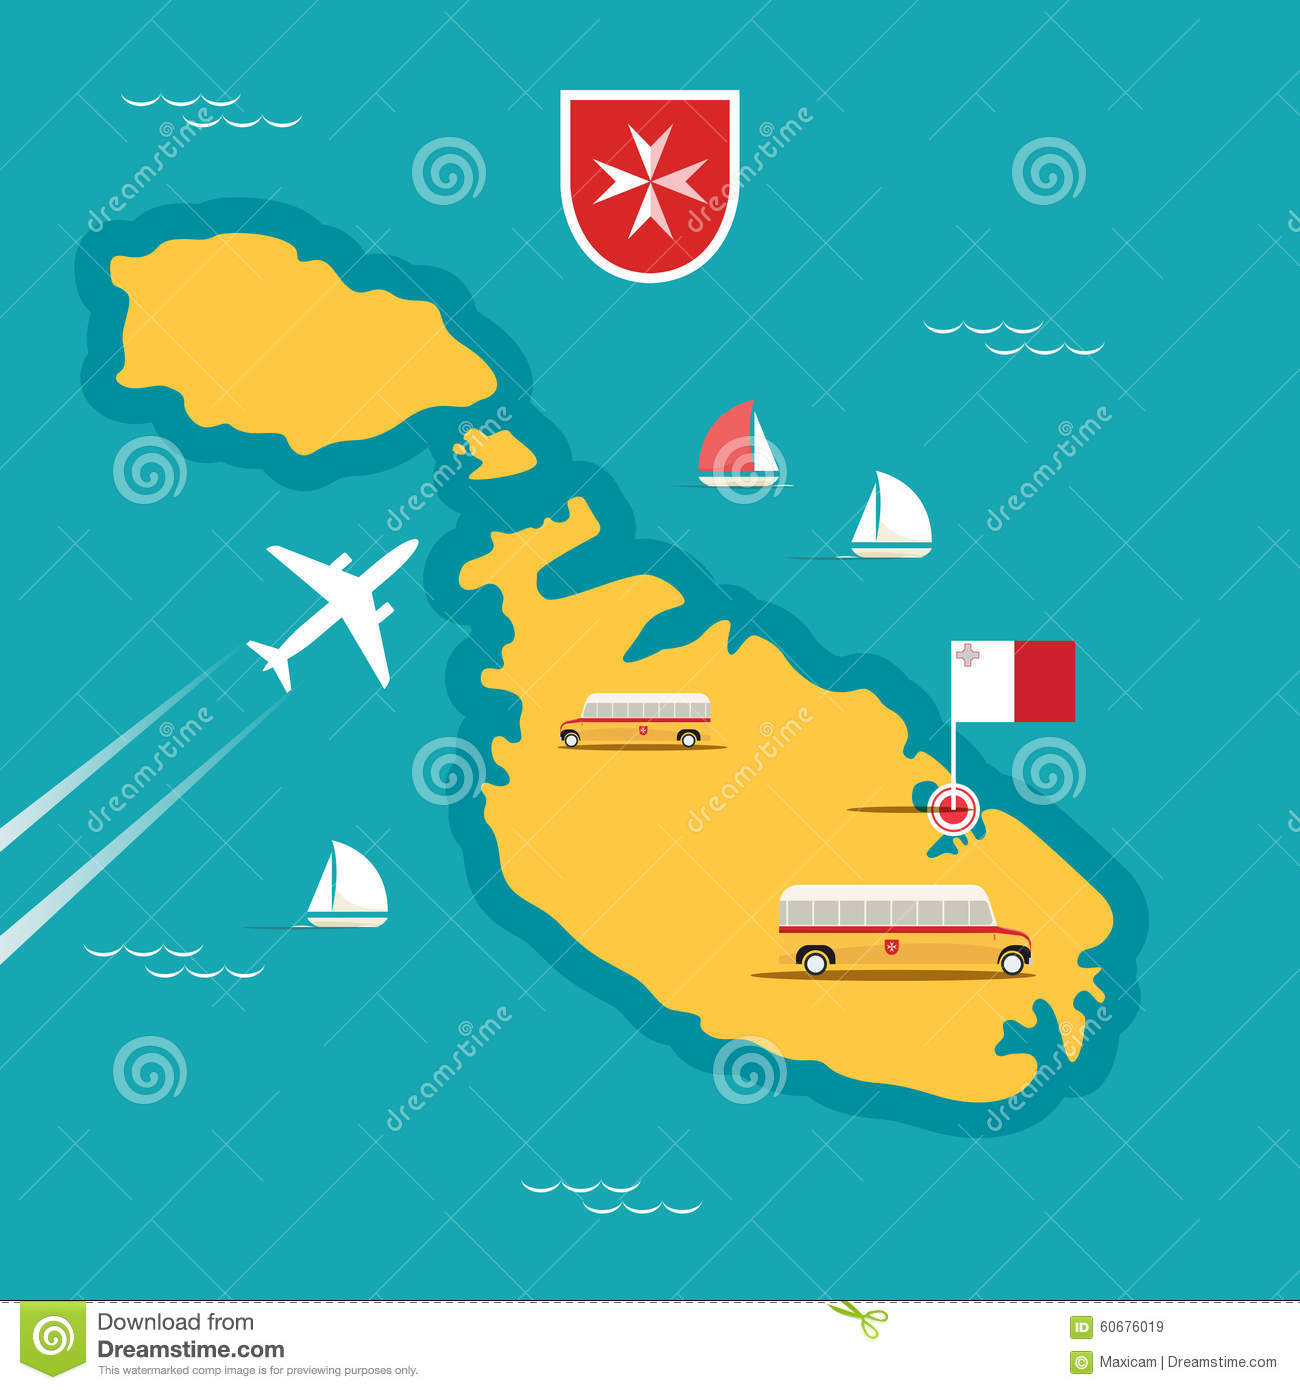 Tourist Map of Malta